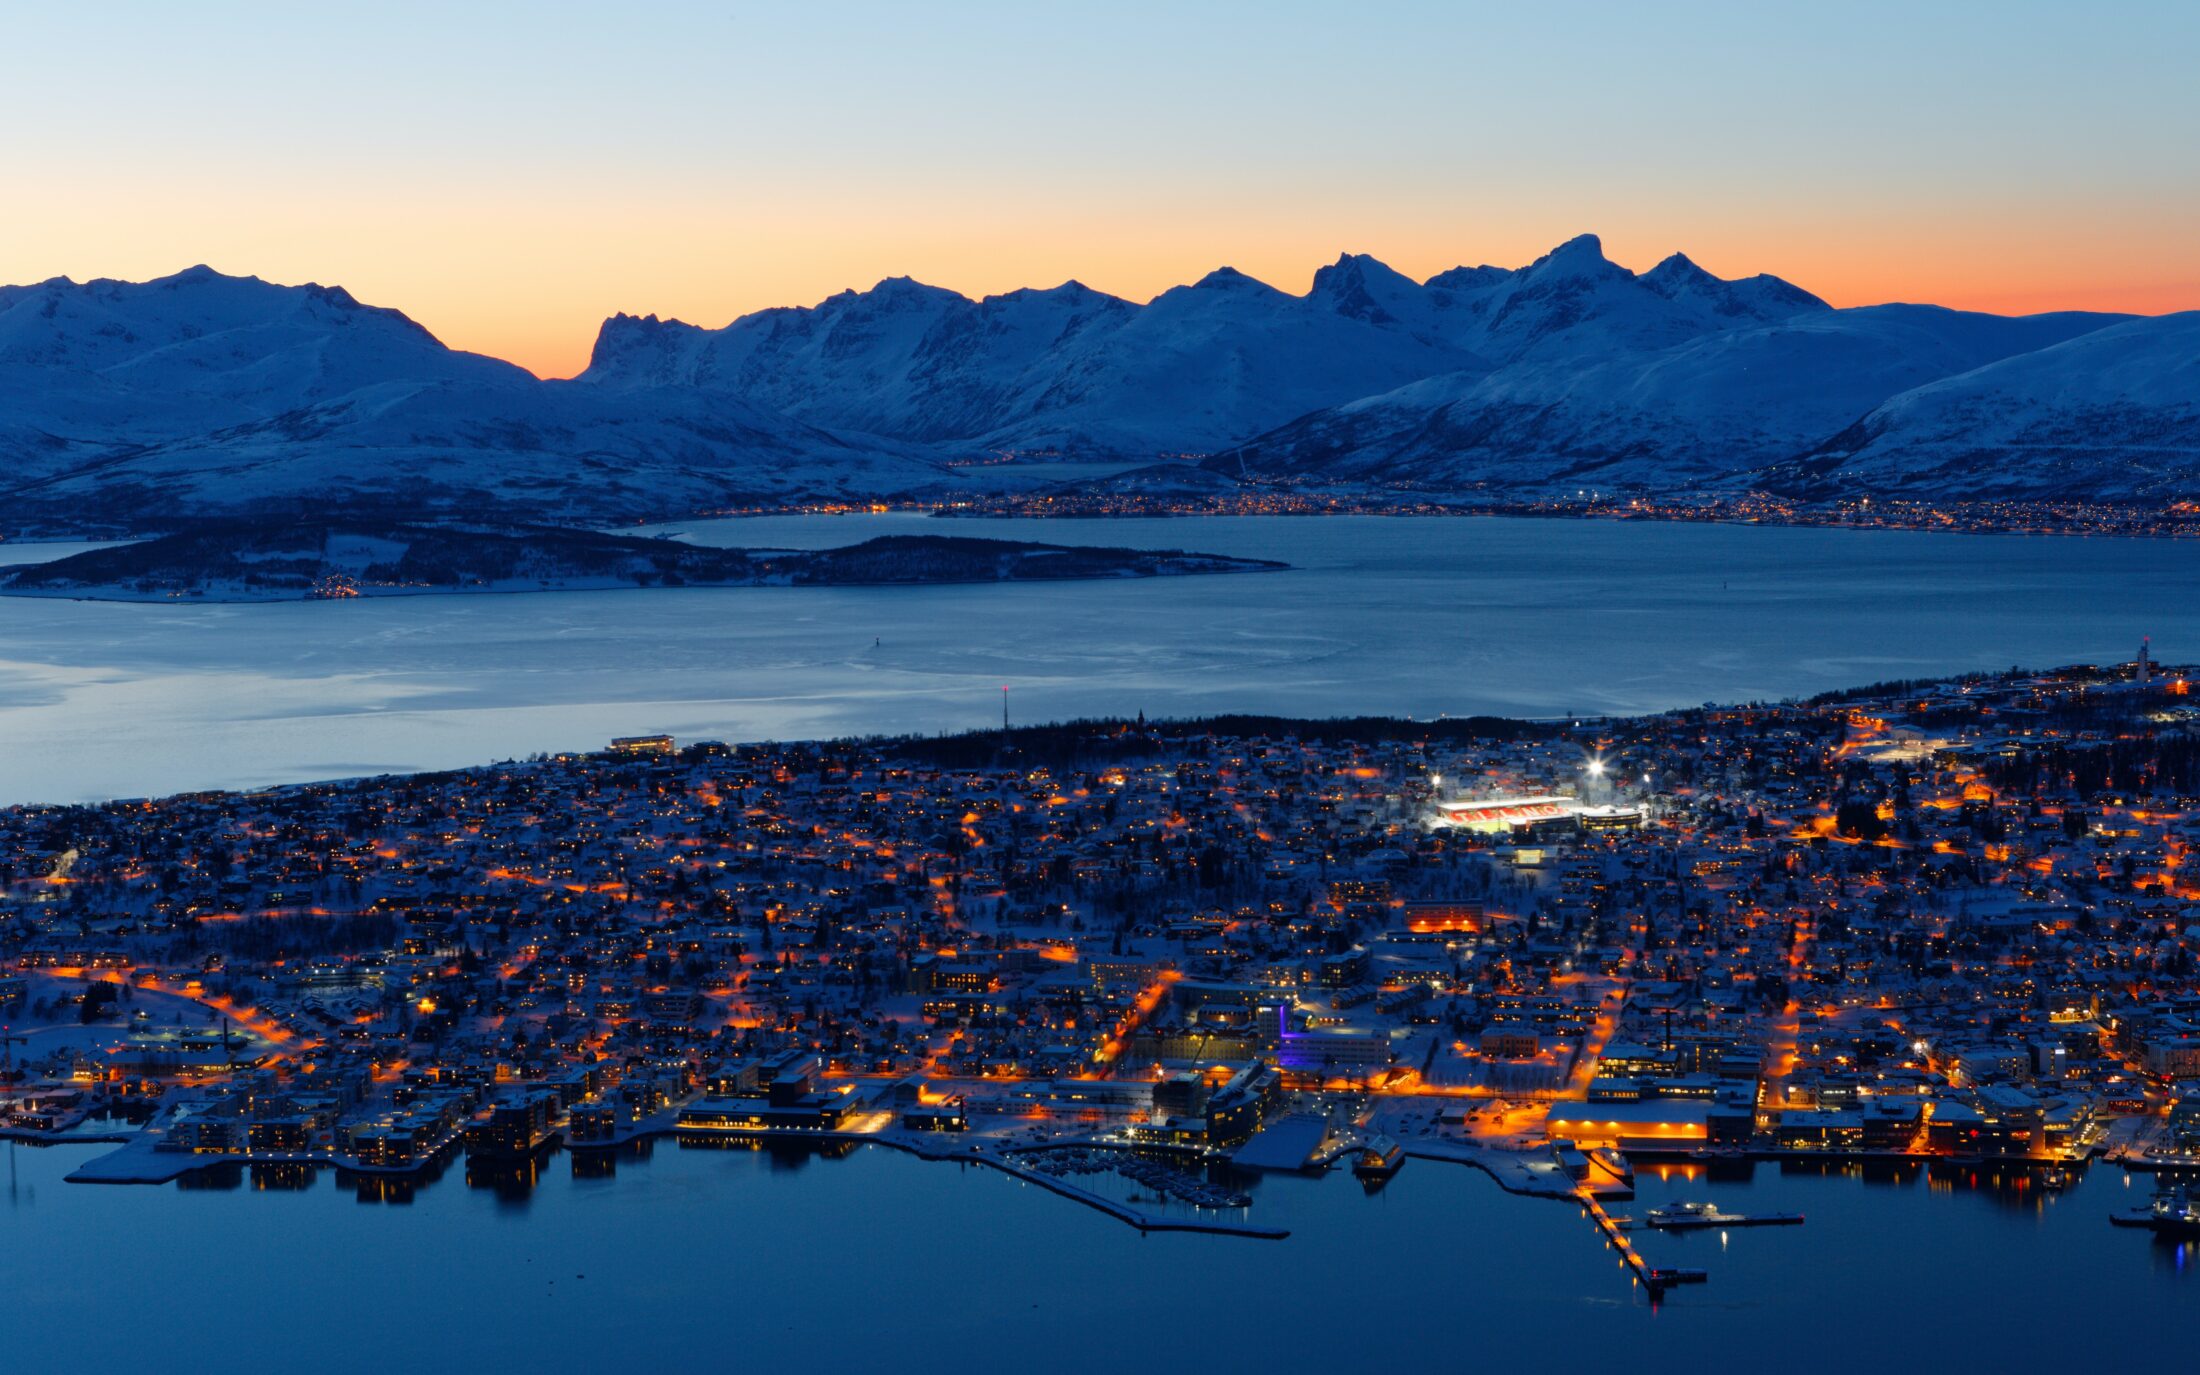 Aerial view of Tromsø, Norway at night. Photo by Harry Jaschhof on Unsplash.